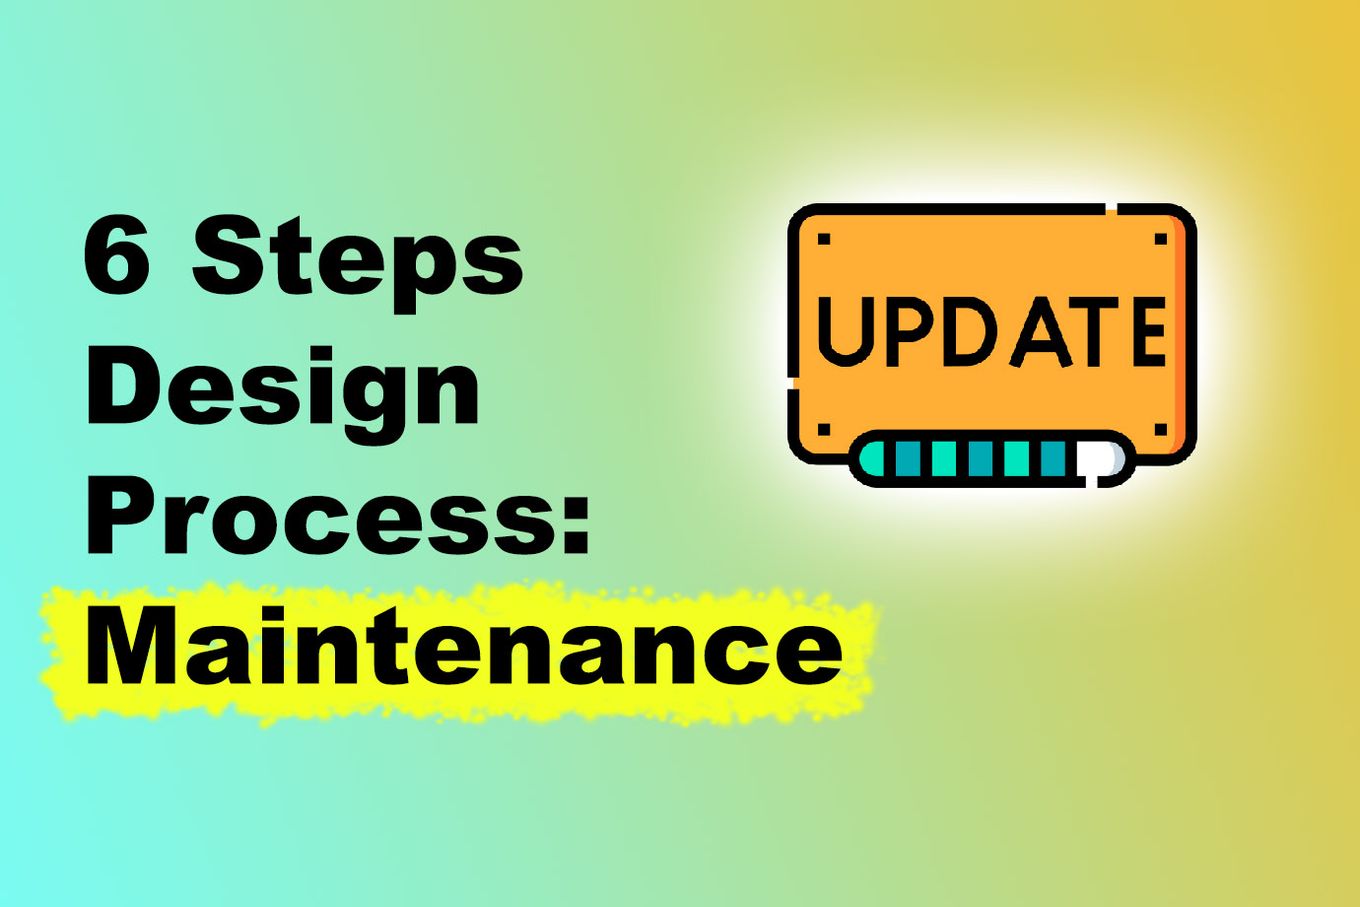 6 Steps Design Process, Maintenance